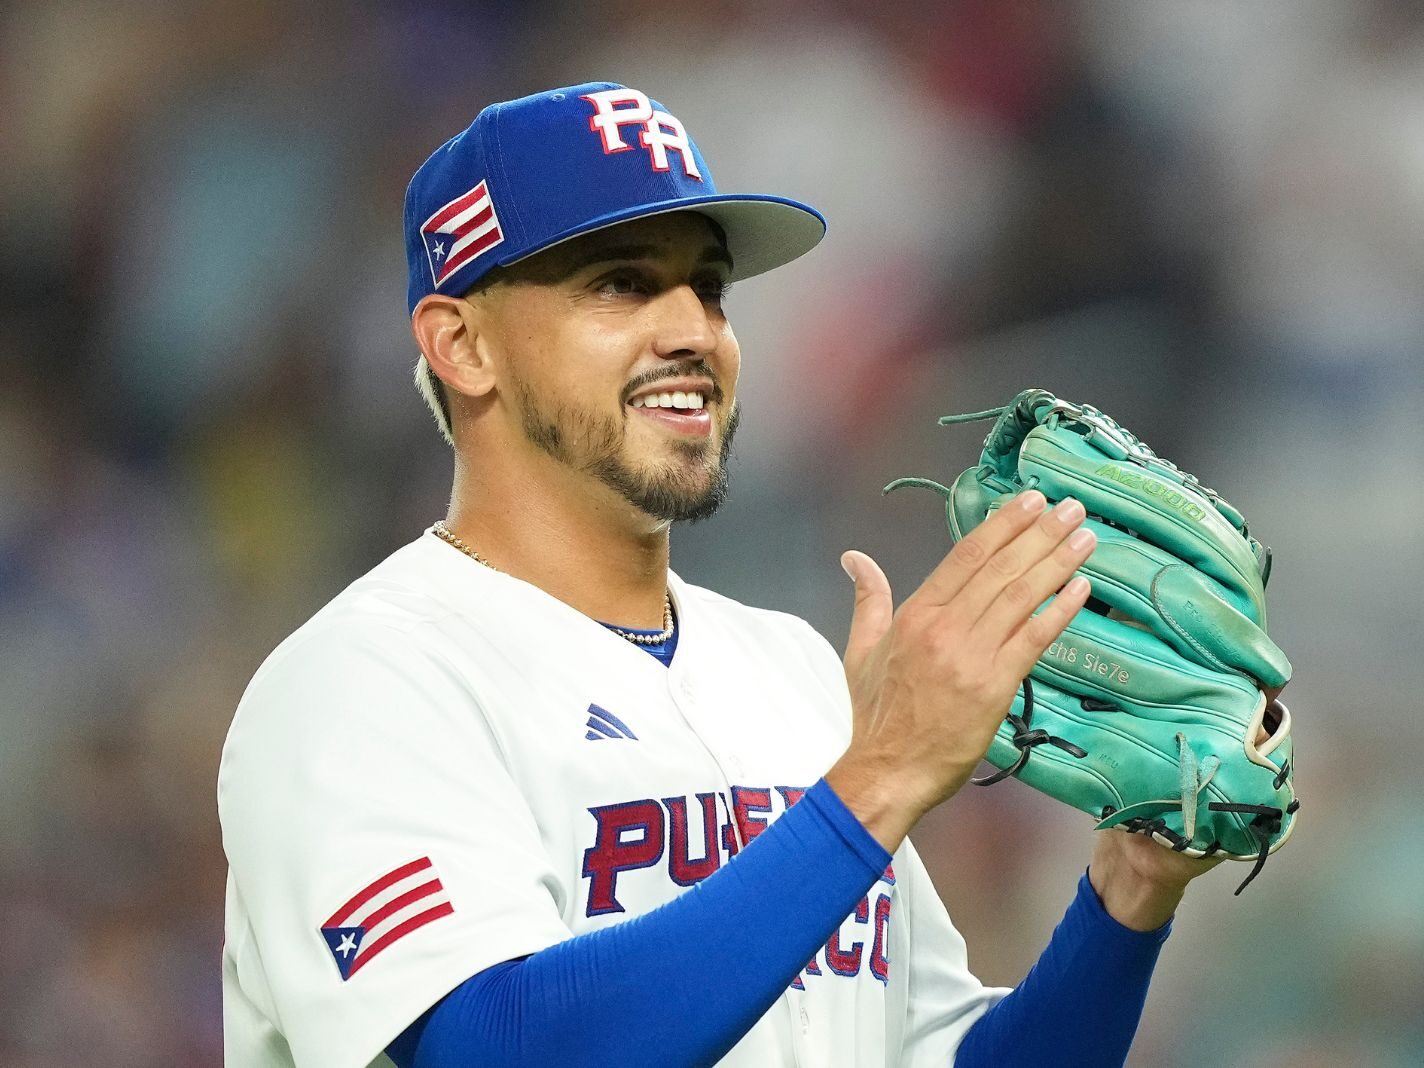 MLB is going back to Puerto Rico - World Baseball Softball